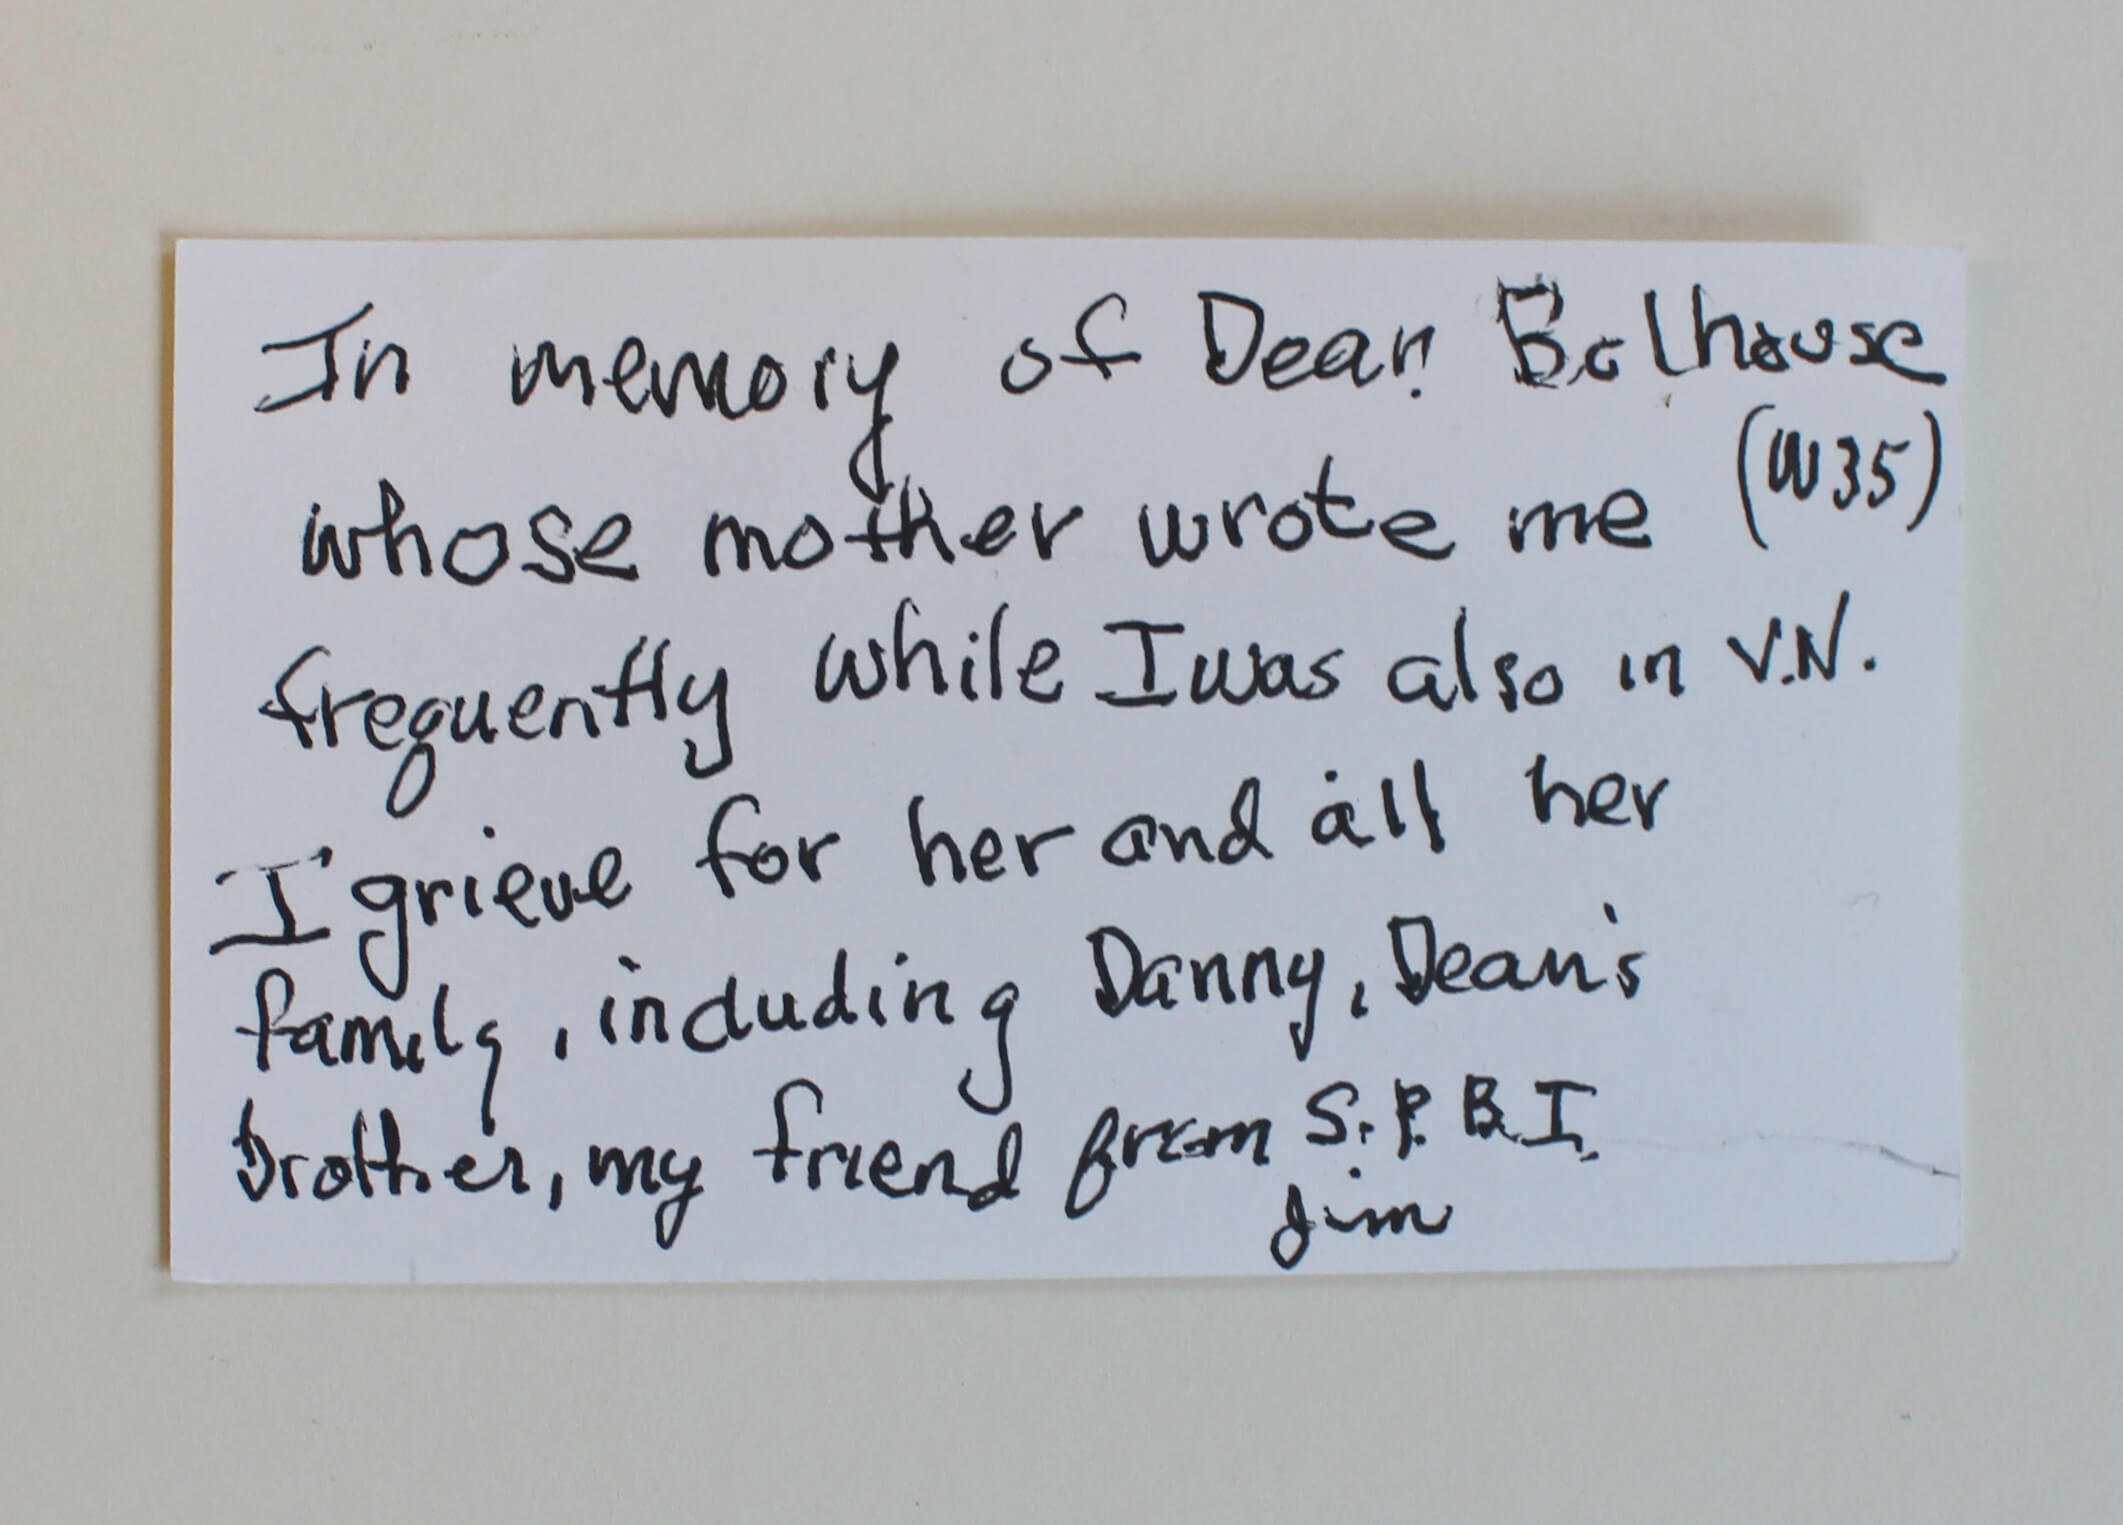 Handwritten note to Dean Bolhouse